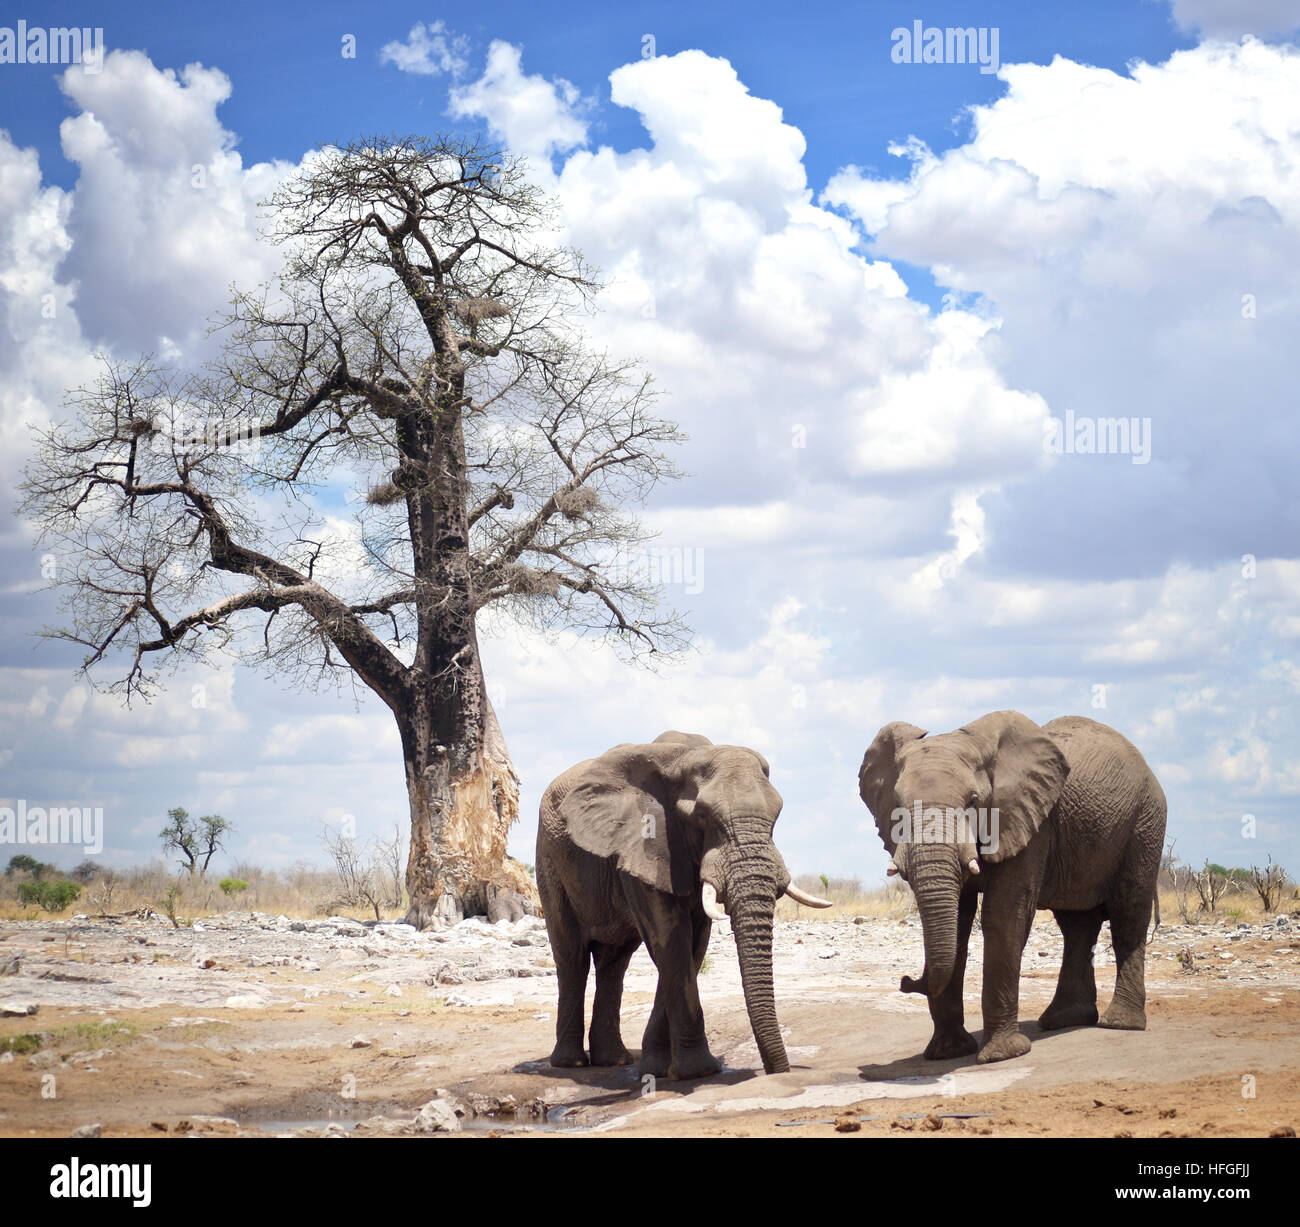 elephants in Africa Stock Photo